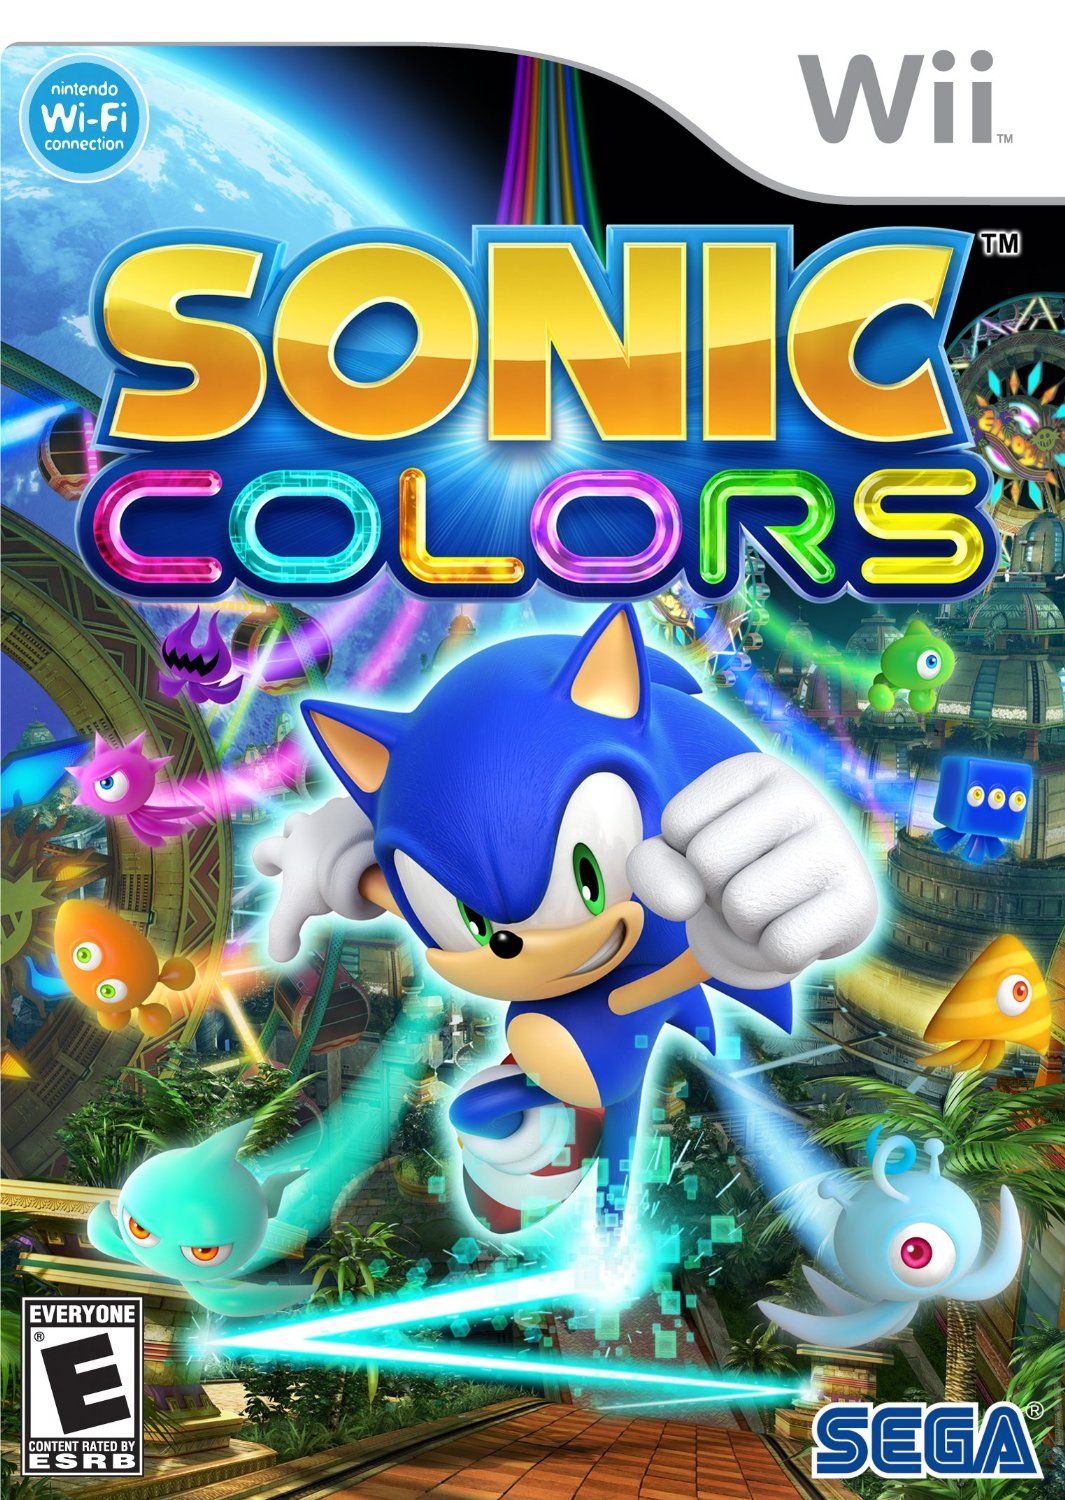 10.19.15 Sonic Colors Desktop Wallpaper